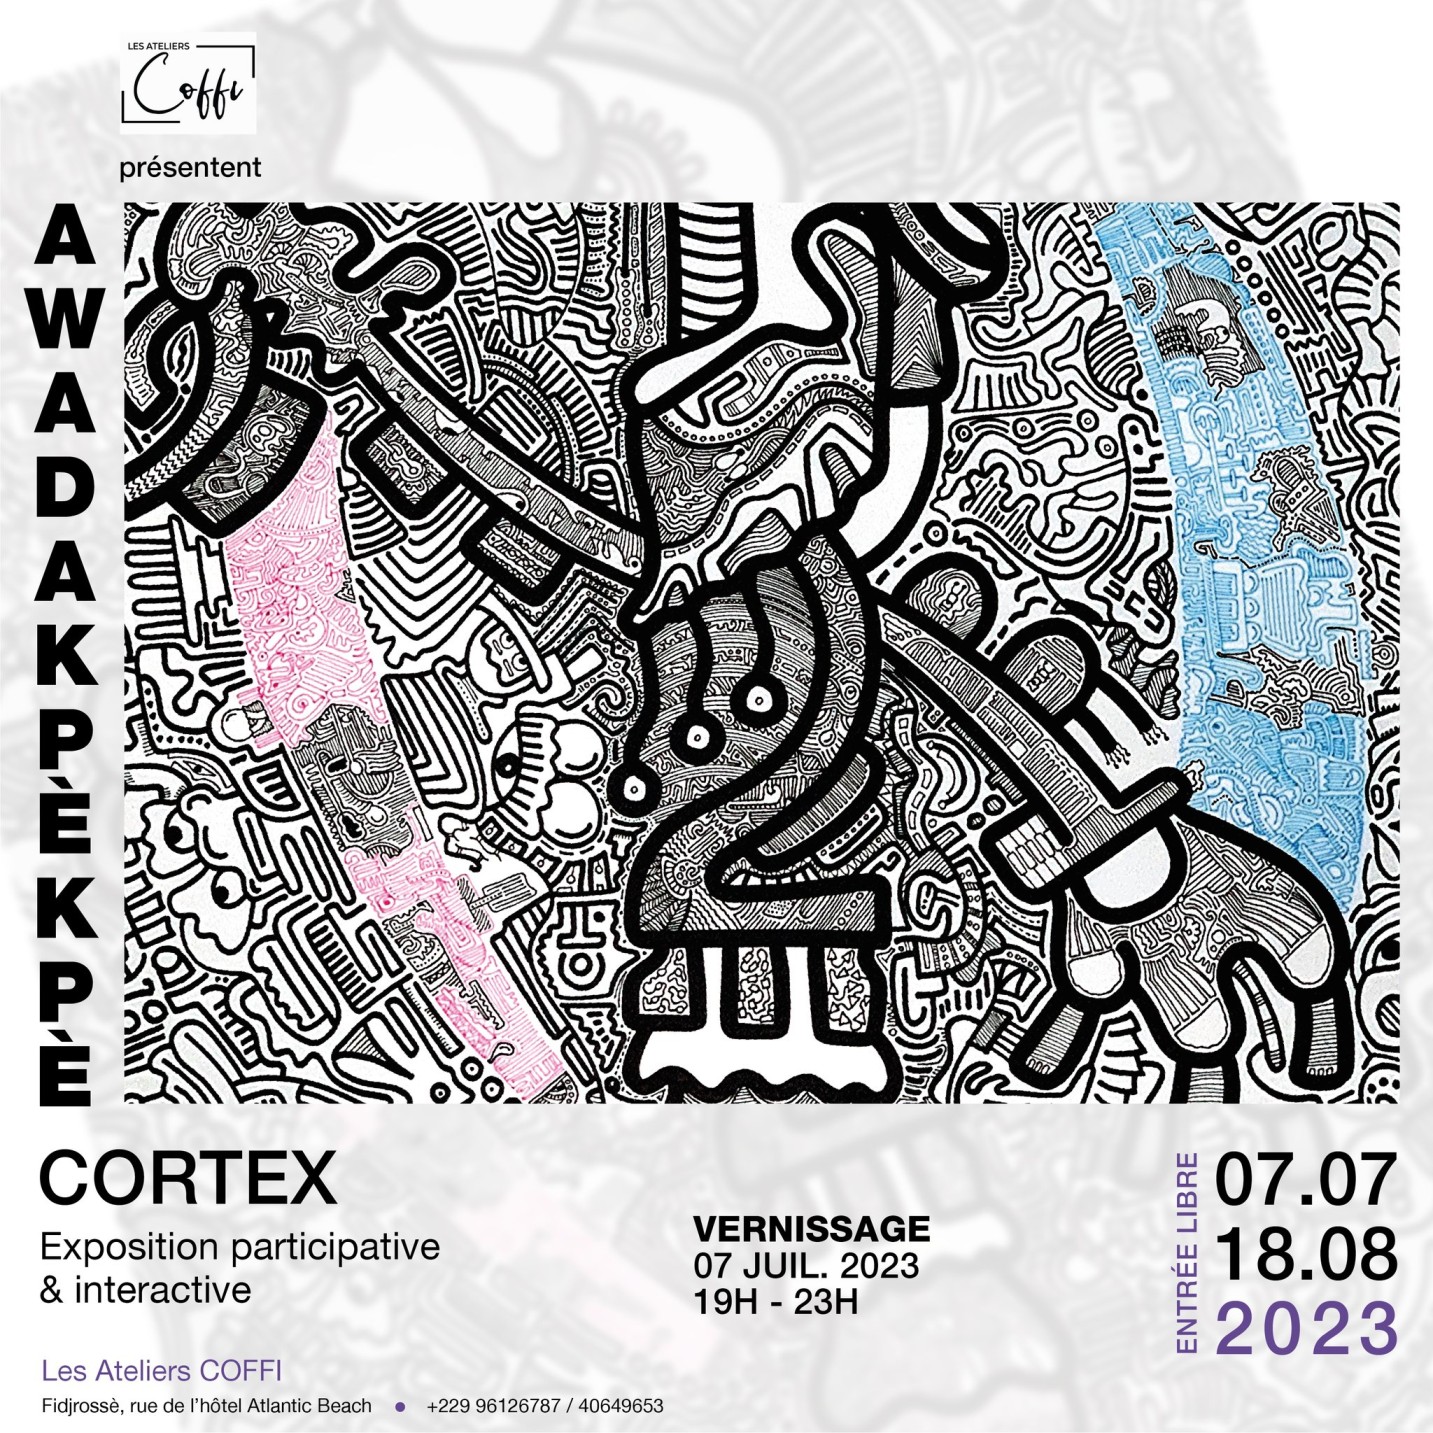 Cortex - Exposition participative & interactive